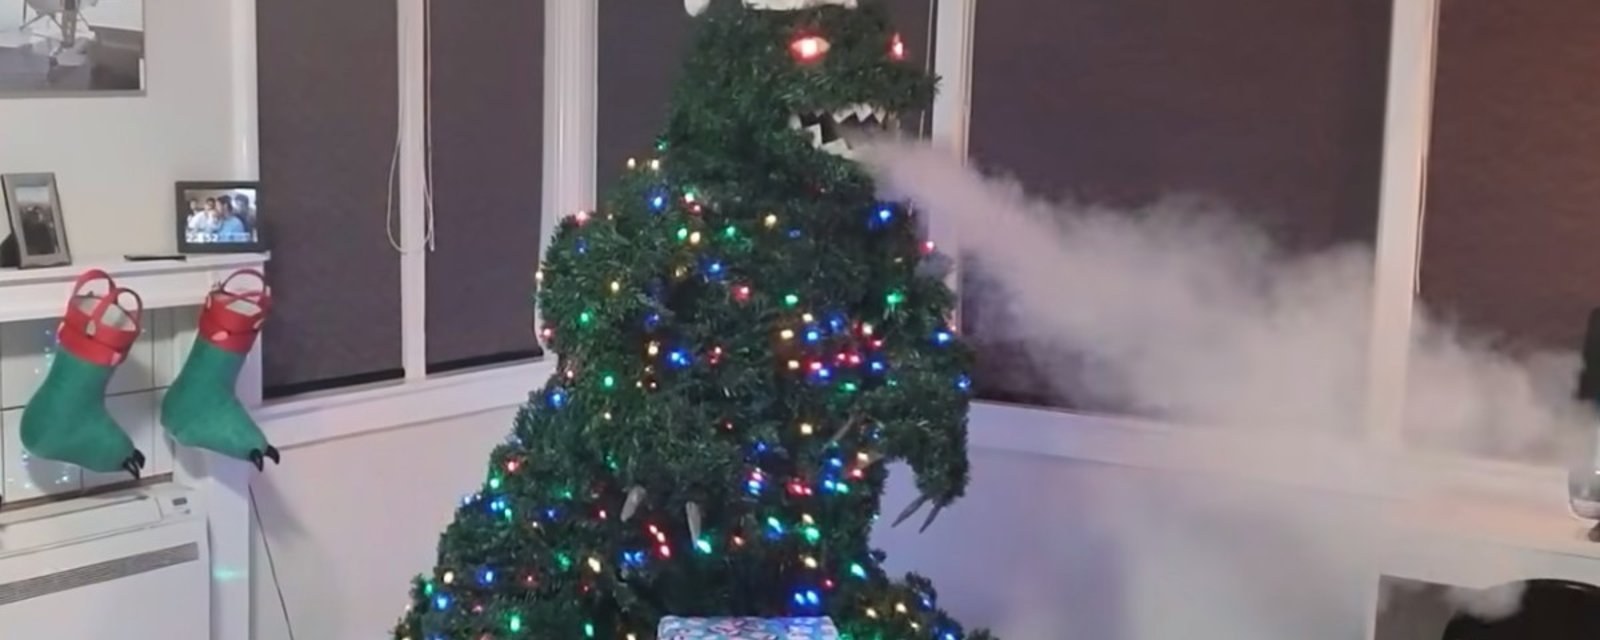 Un papa crée un sapin de Noël en forme de Godzilla qui crache de la fumée